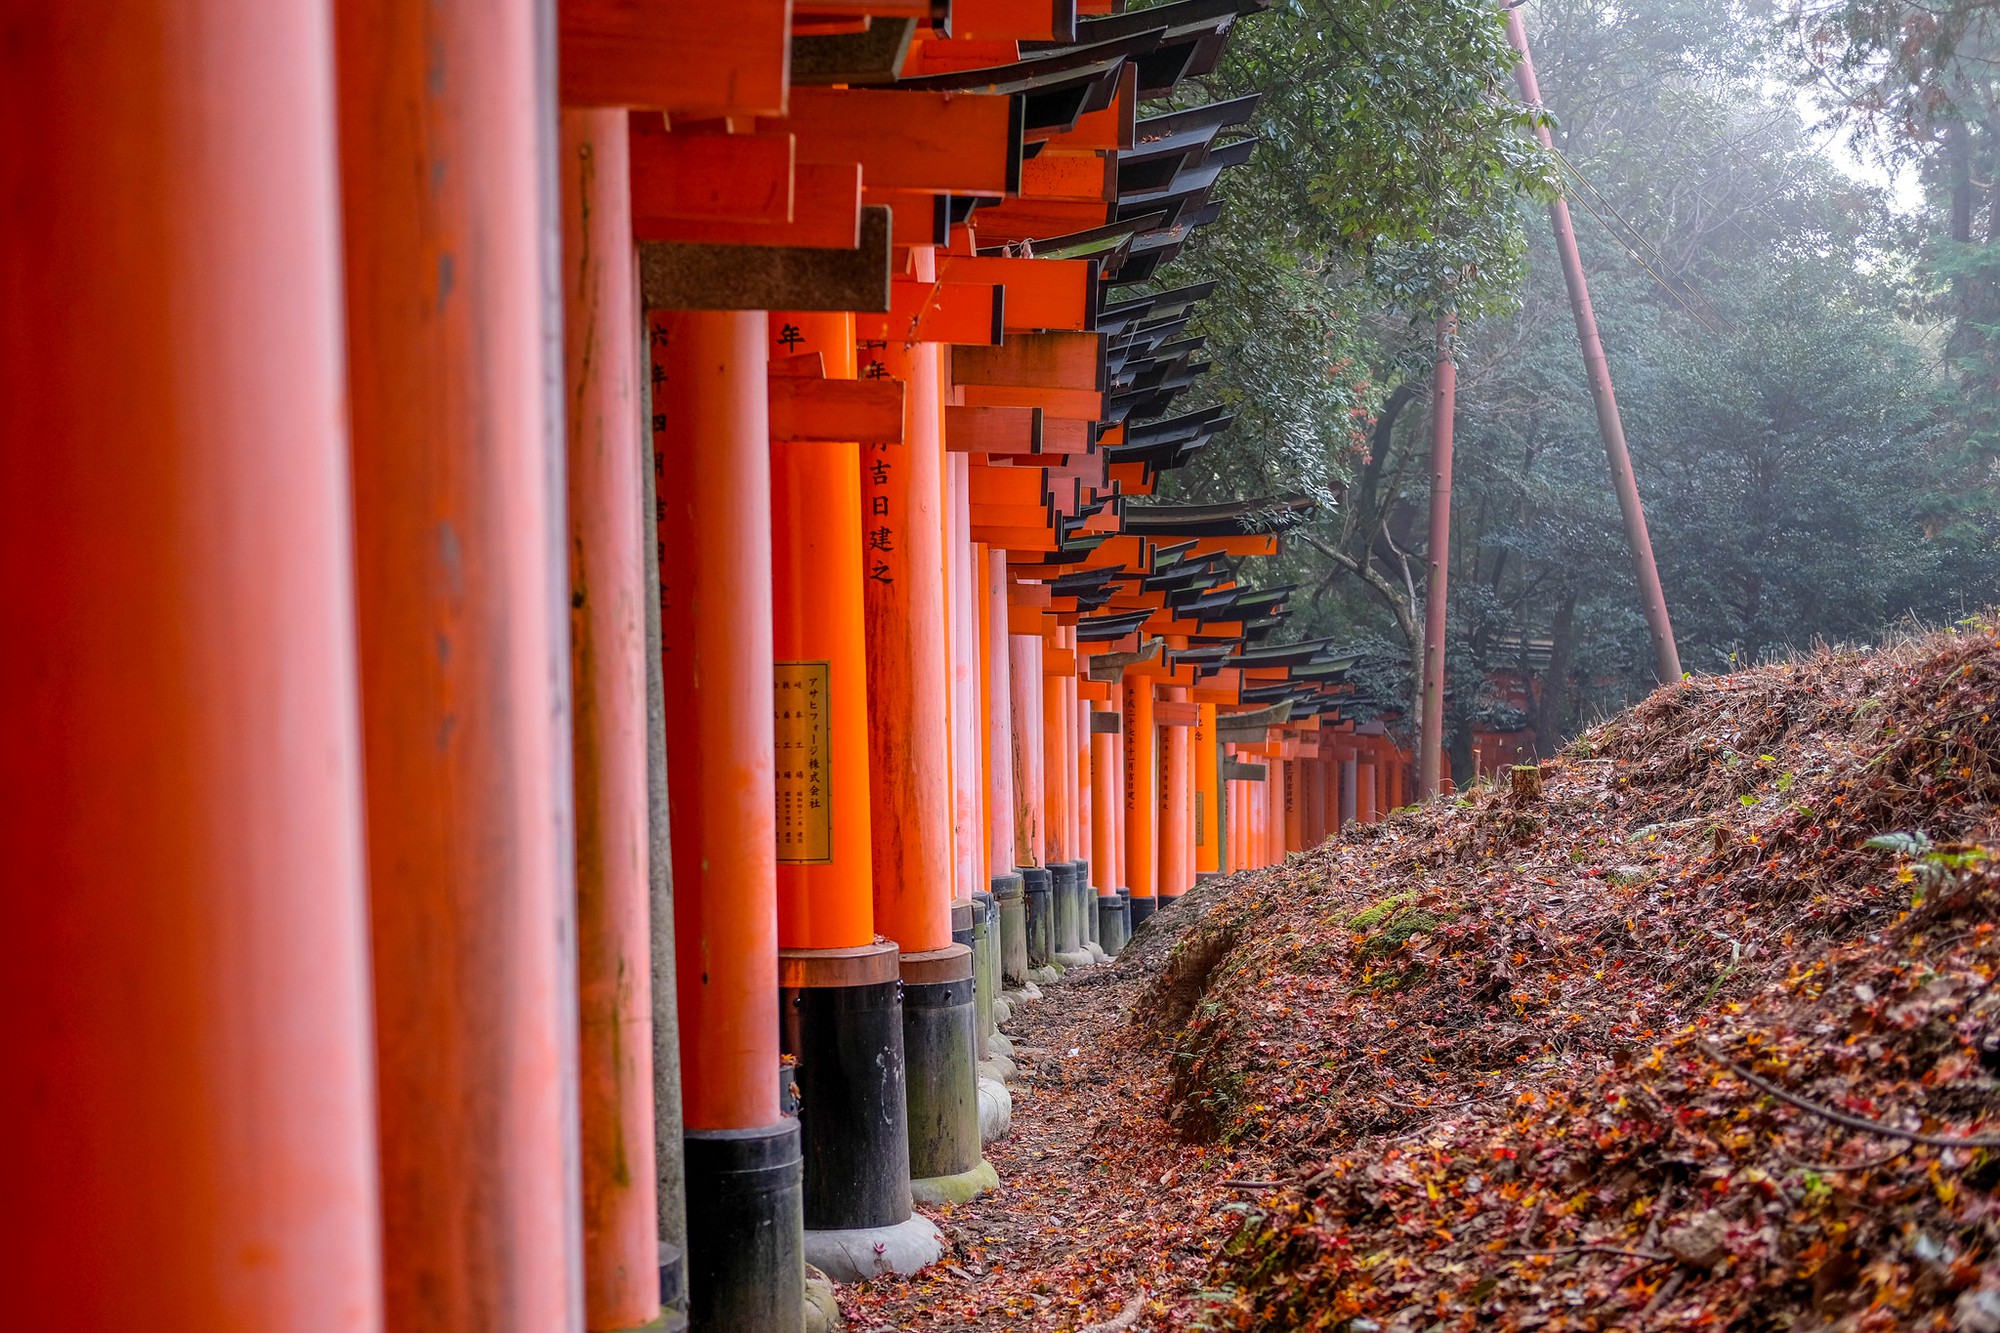 Torii Gates at Fushimi Inari Shrine. Credit: sergejf. Licensed under CC 2.0.